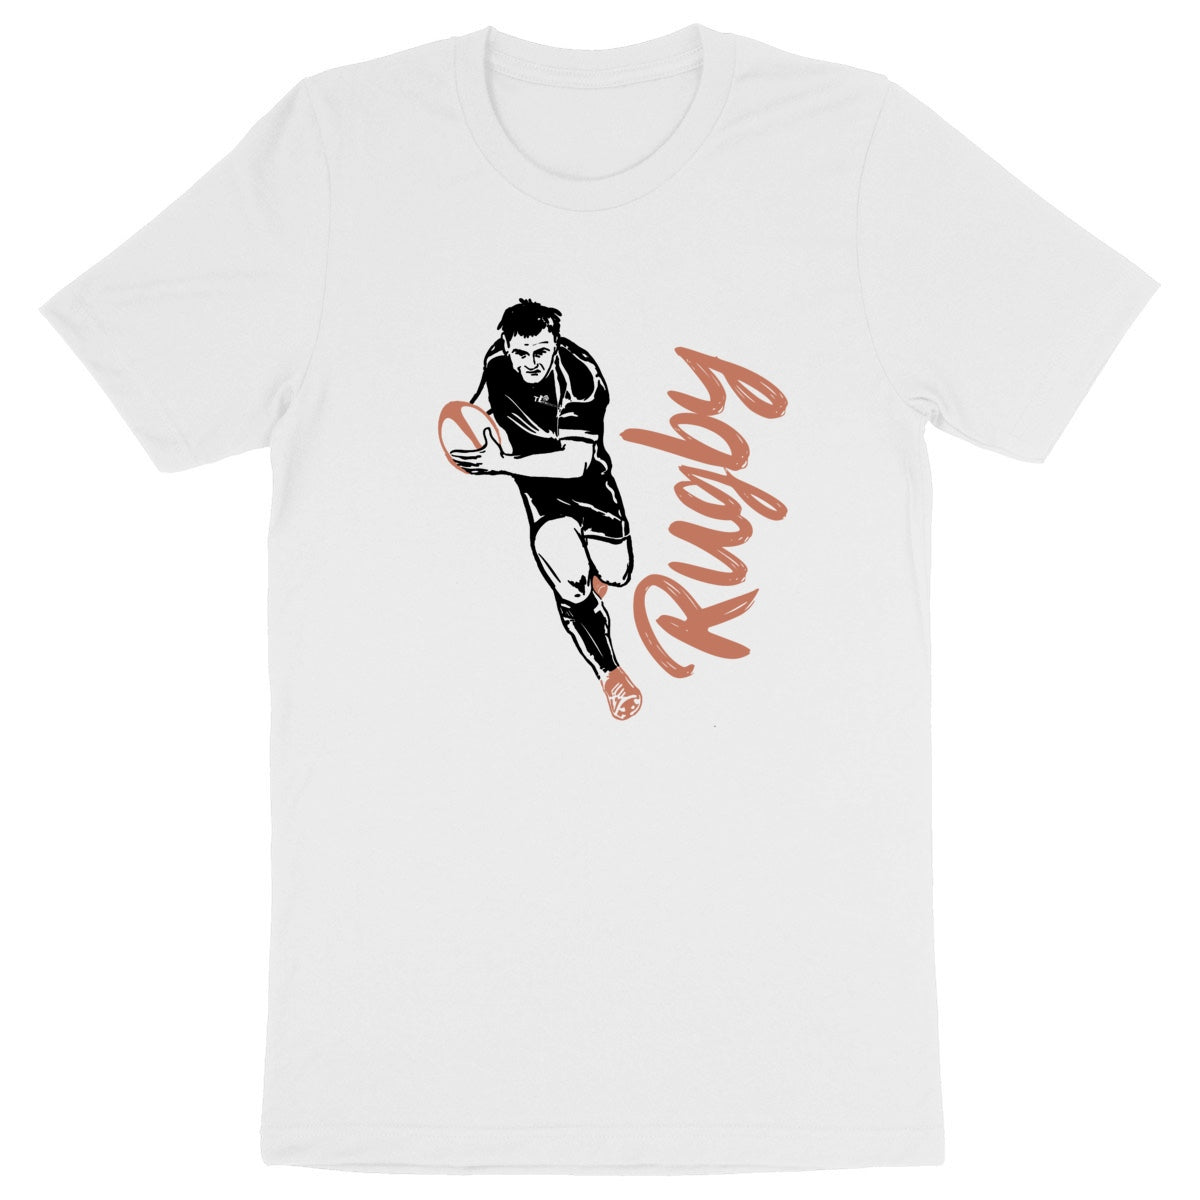 T-Shirt Homme Bio - Sport Rugby, T-shirt en coton bio rugby sport de t-french, t-shirt sport rugby, t-shirt homme rugby, t-shirt de rugby, t-shirt coupe du monde de rugby, tee shirt ballon rond, t-shirt ballon rond, t-shirt en coton bio rugby, t-shirt blanc 